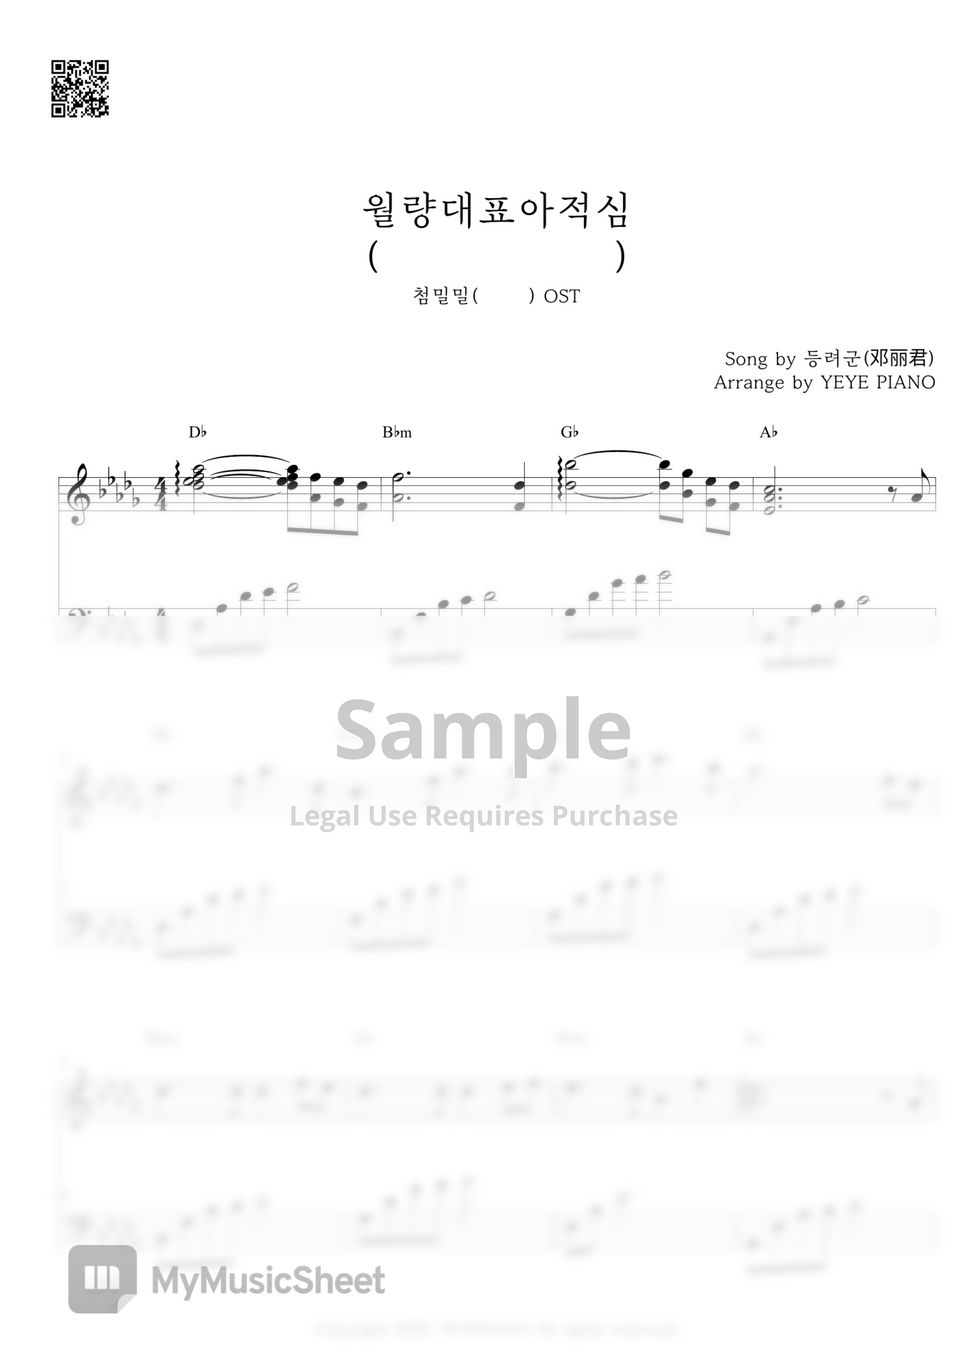 Teresa Teng - The Moon Represents My Heart (甛蜜蜜 OST) by YEYE PIANO